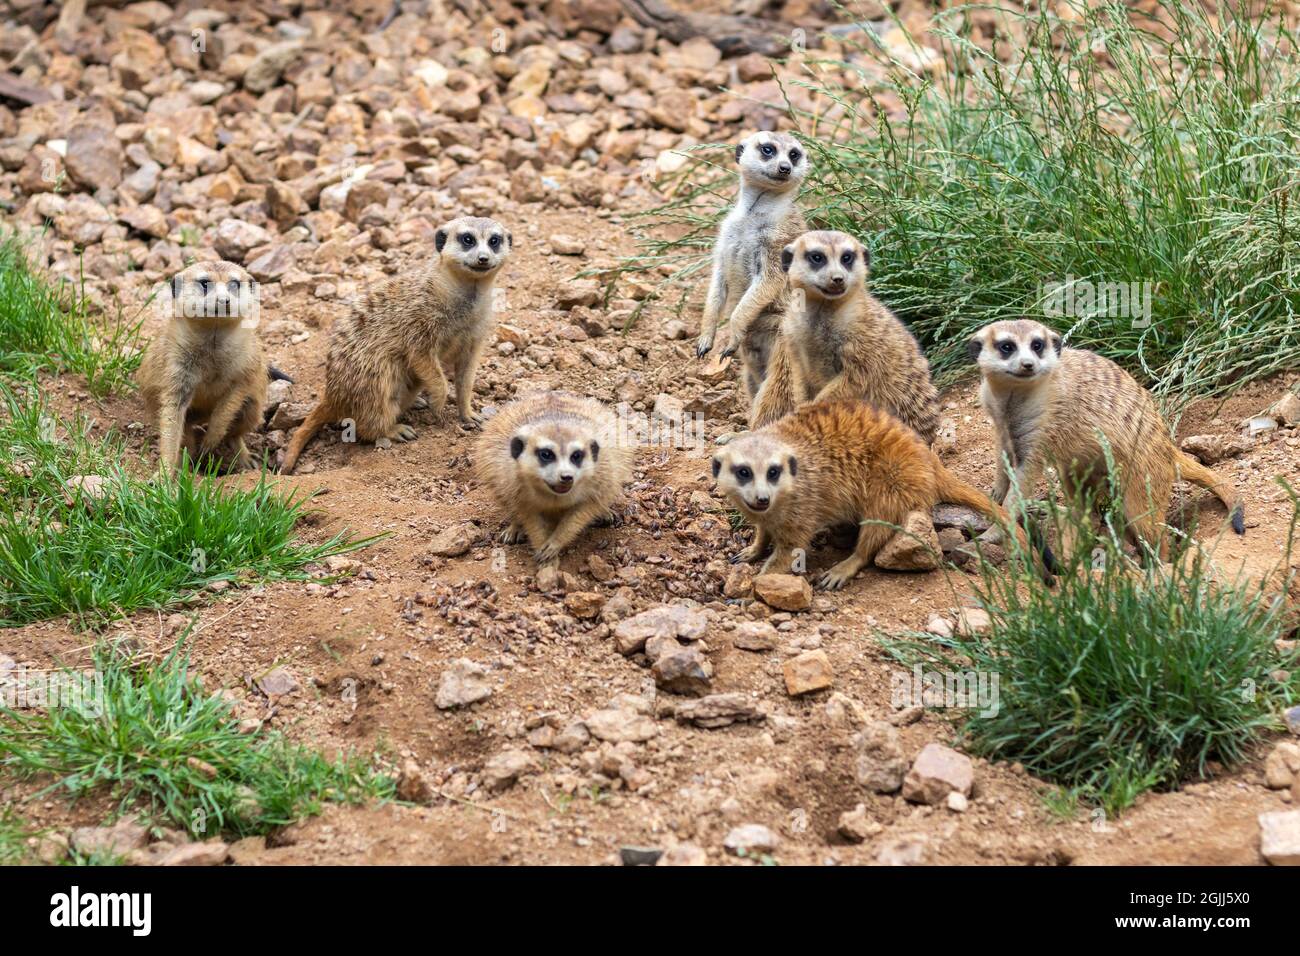 gruppo di meerkats - meerkats guardare in una direzione Foto Stock